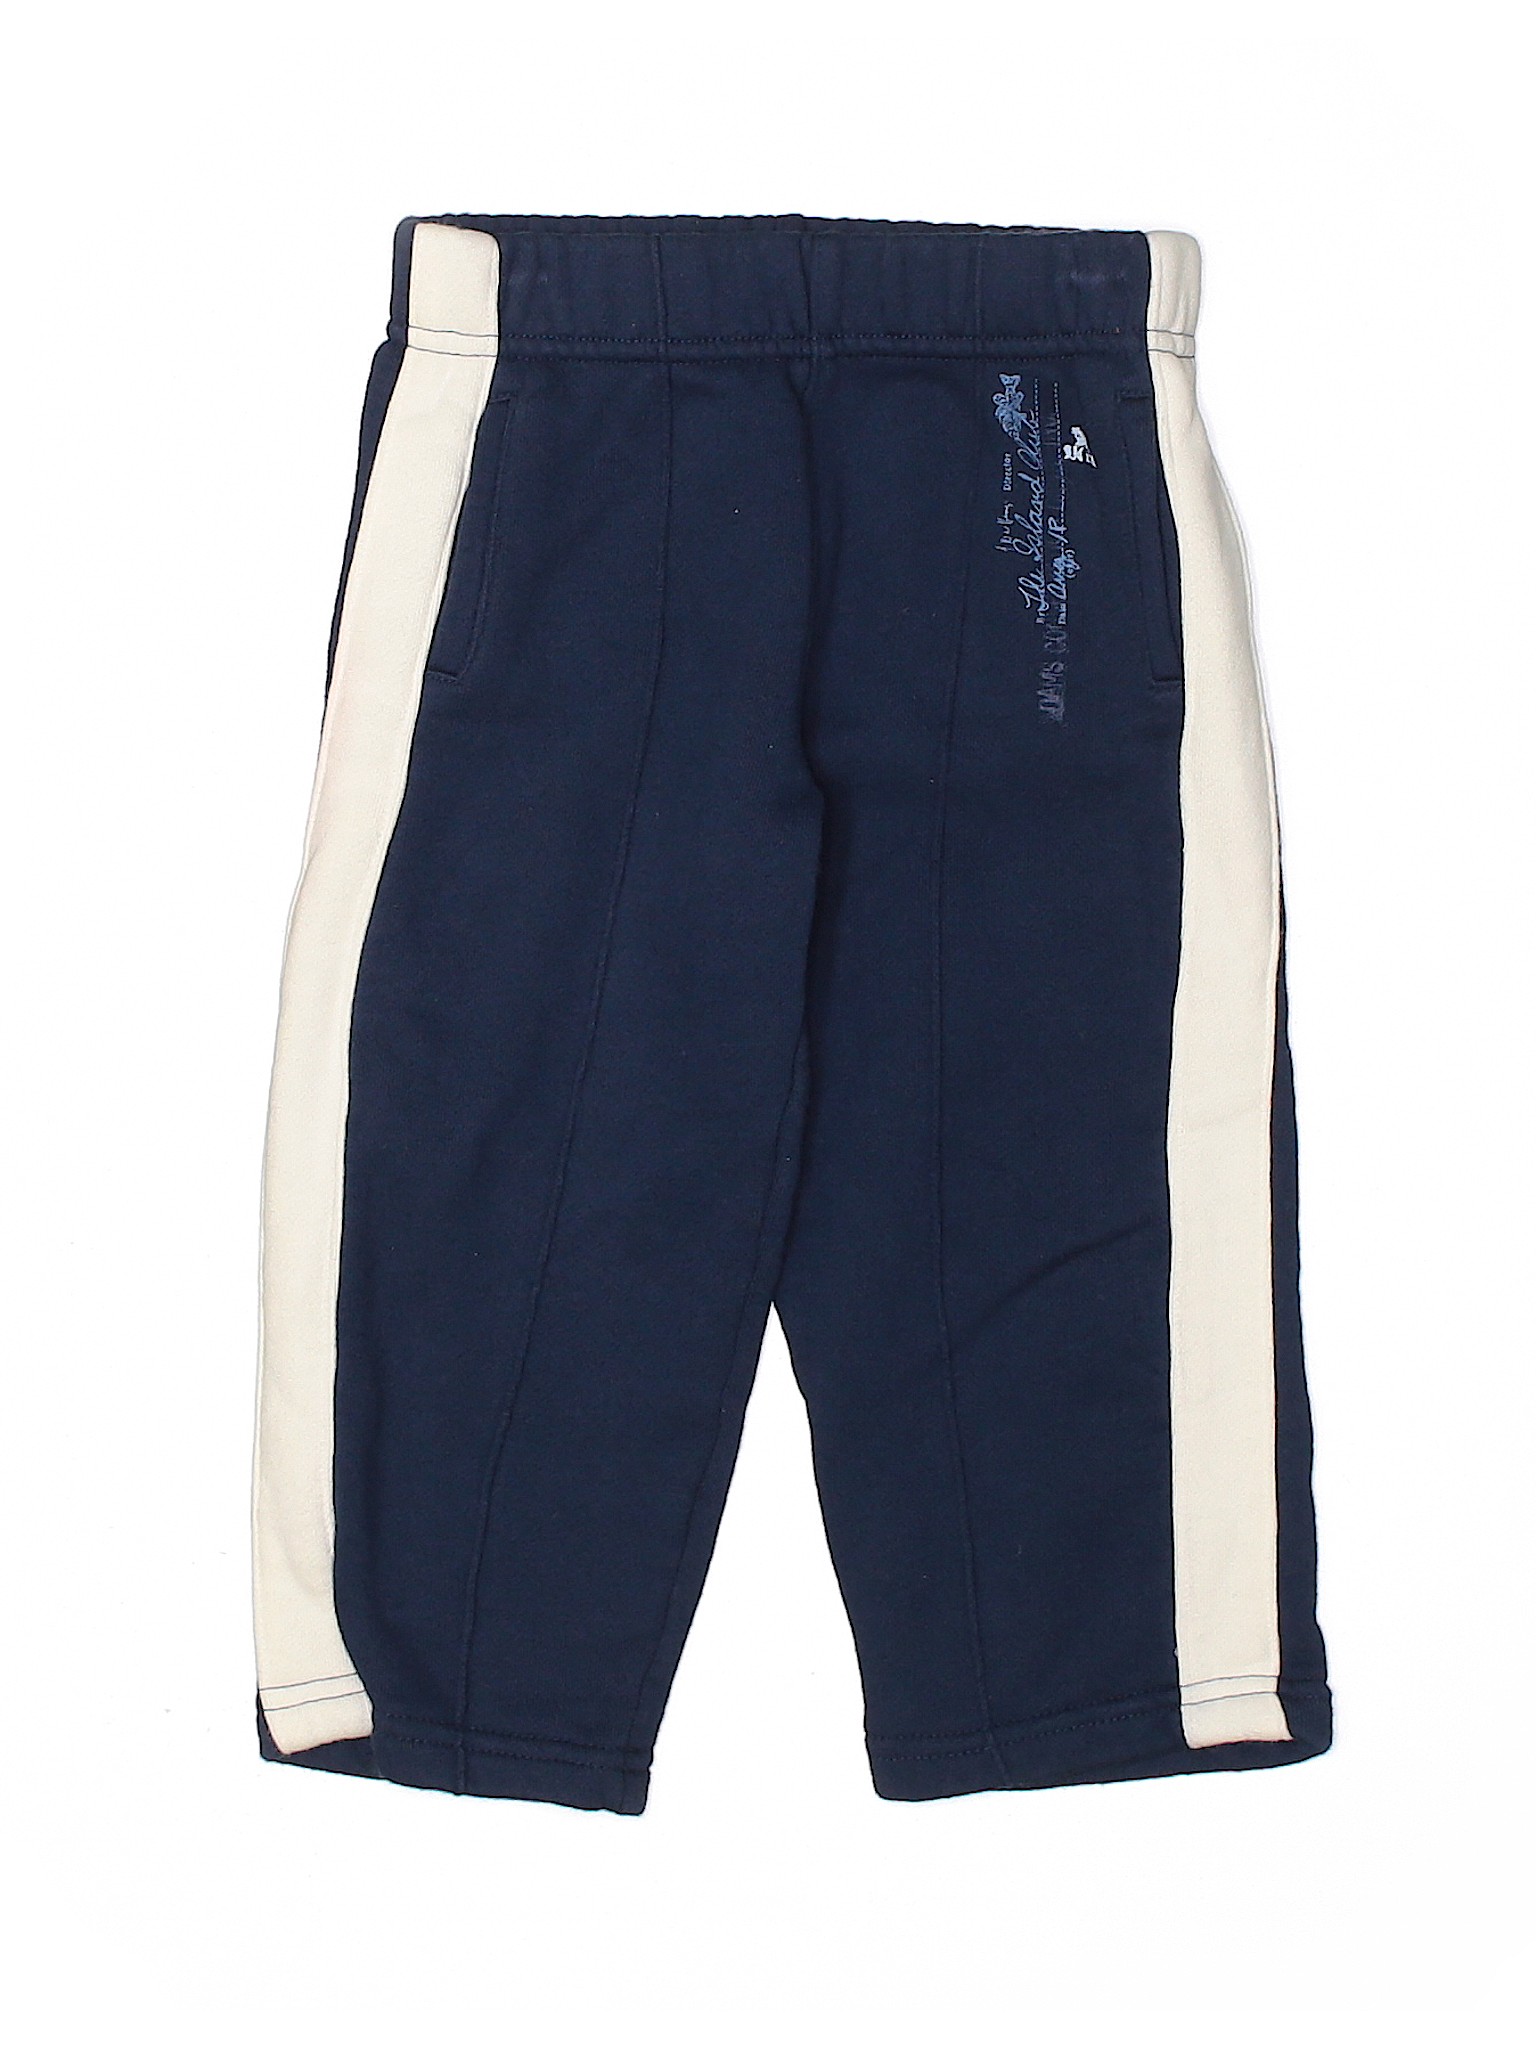 Polo by Ralph Lauren Boys Blue Sweatpants 24 Months | eBay